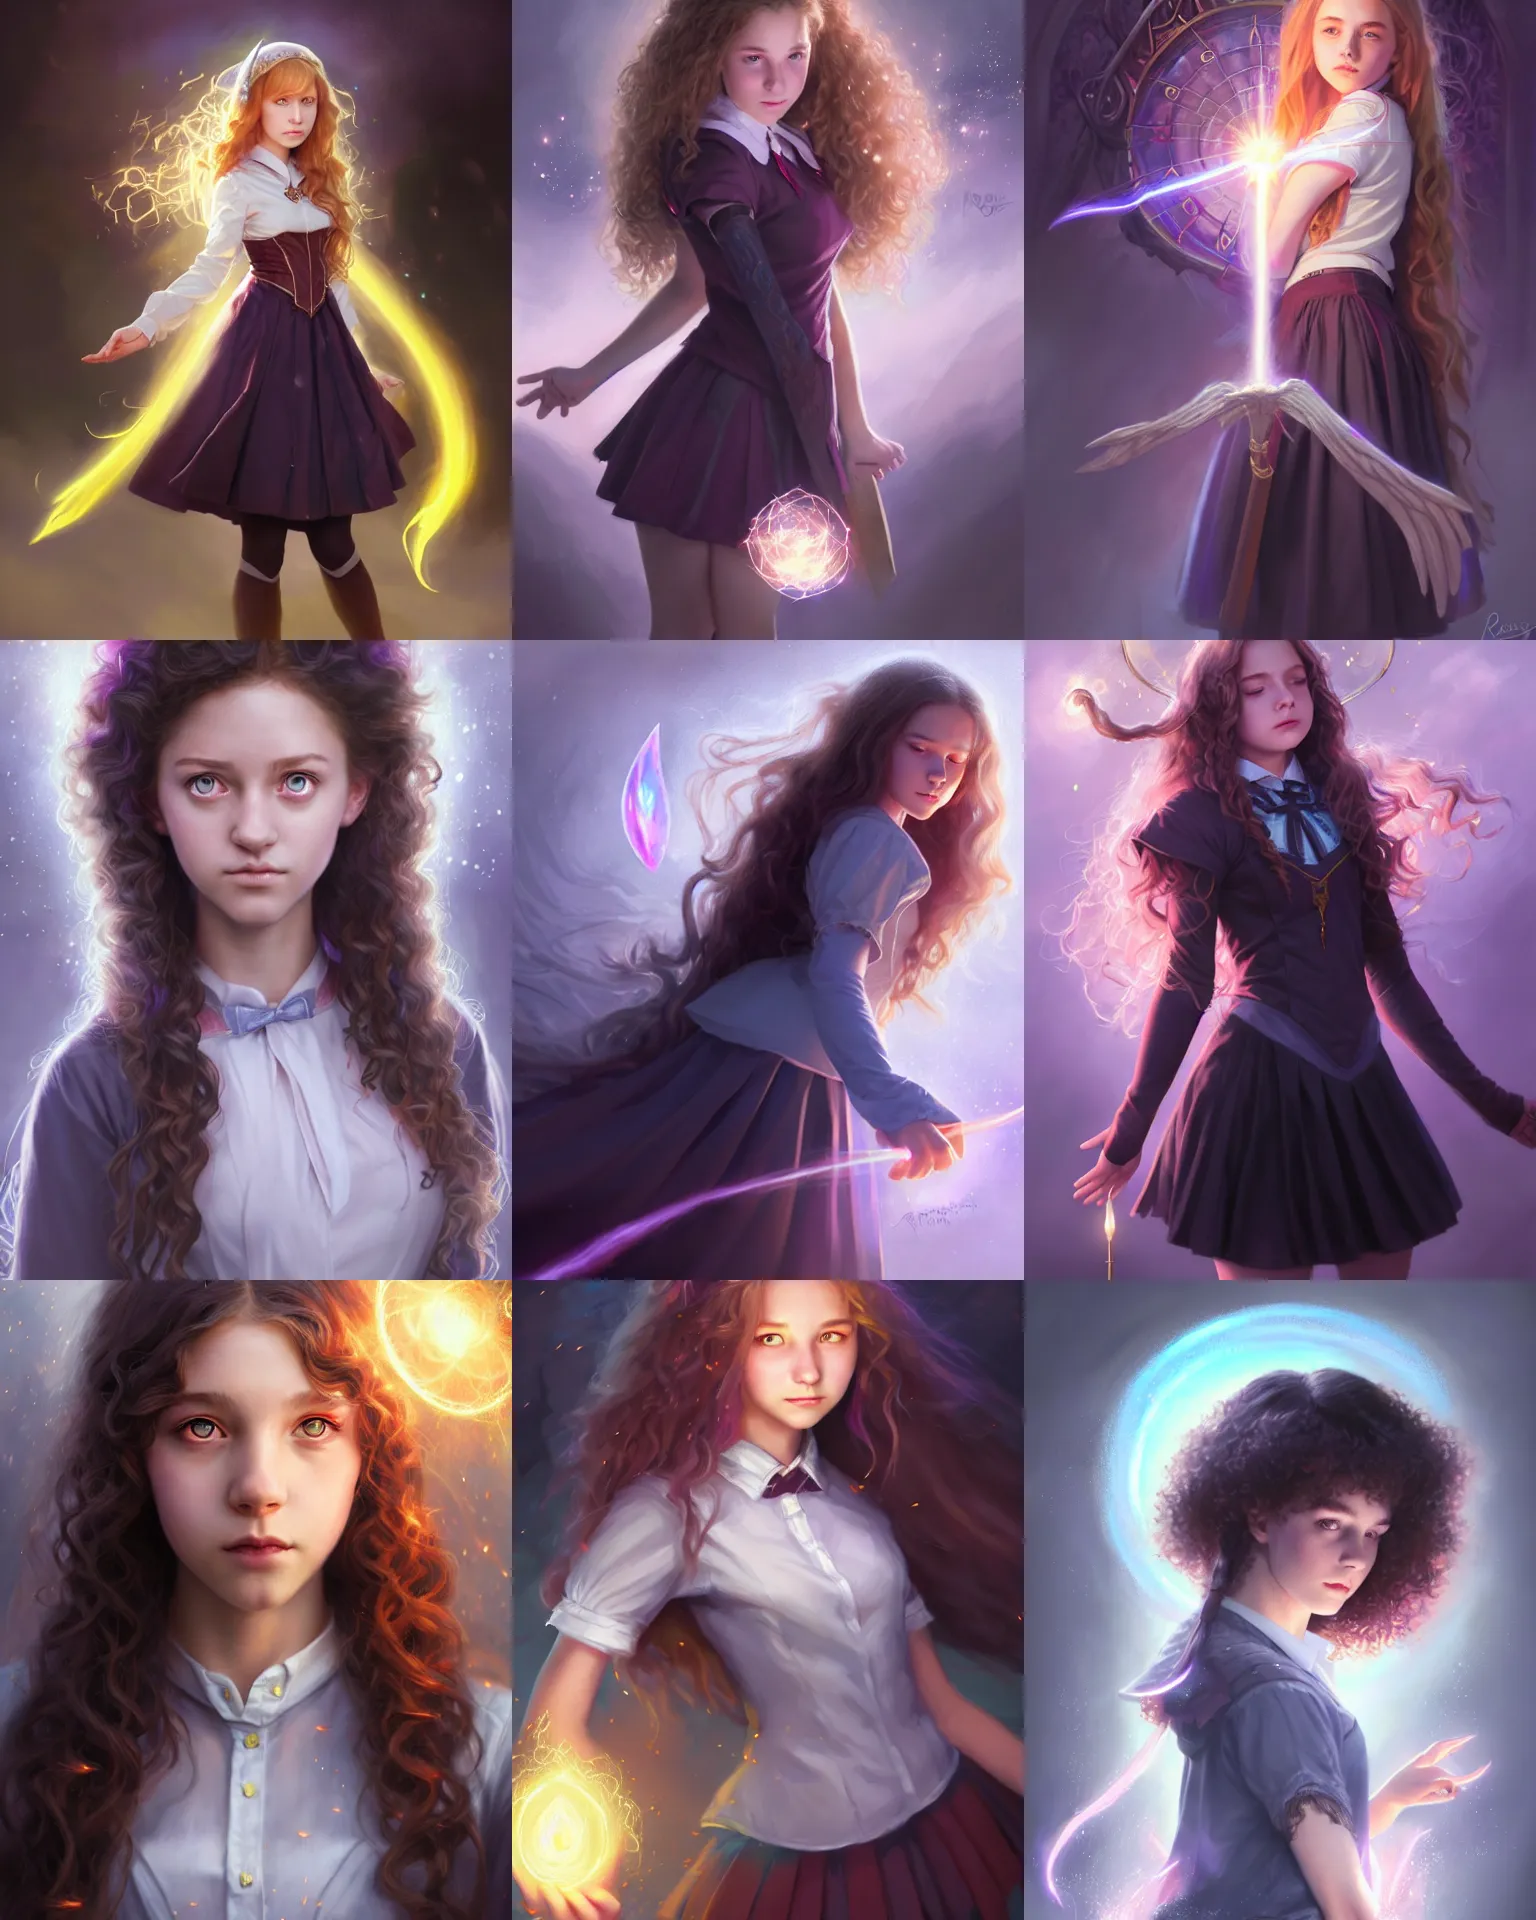 realistic portrait of a innocent young teen girl, d&d magic fant 